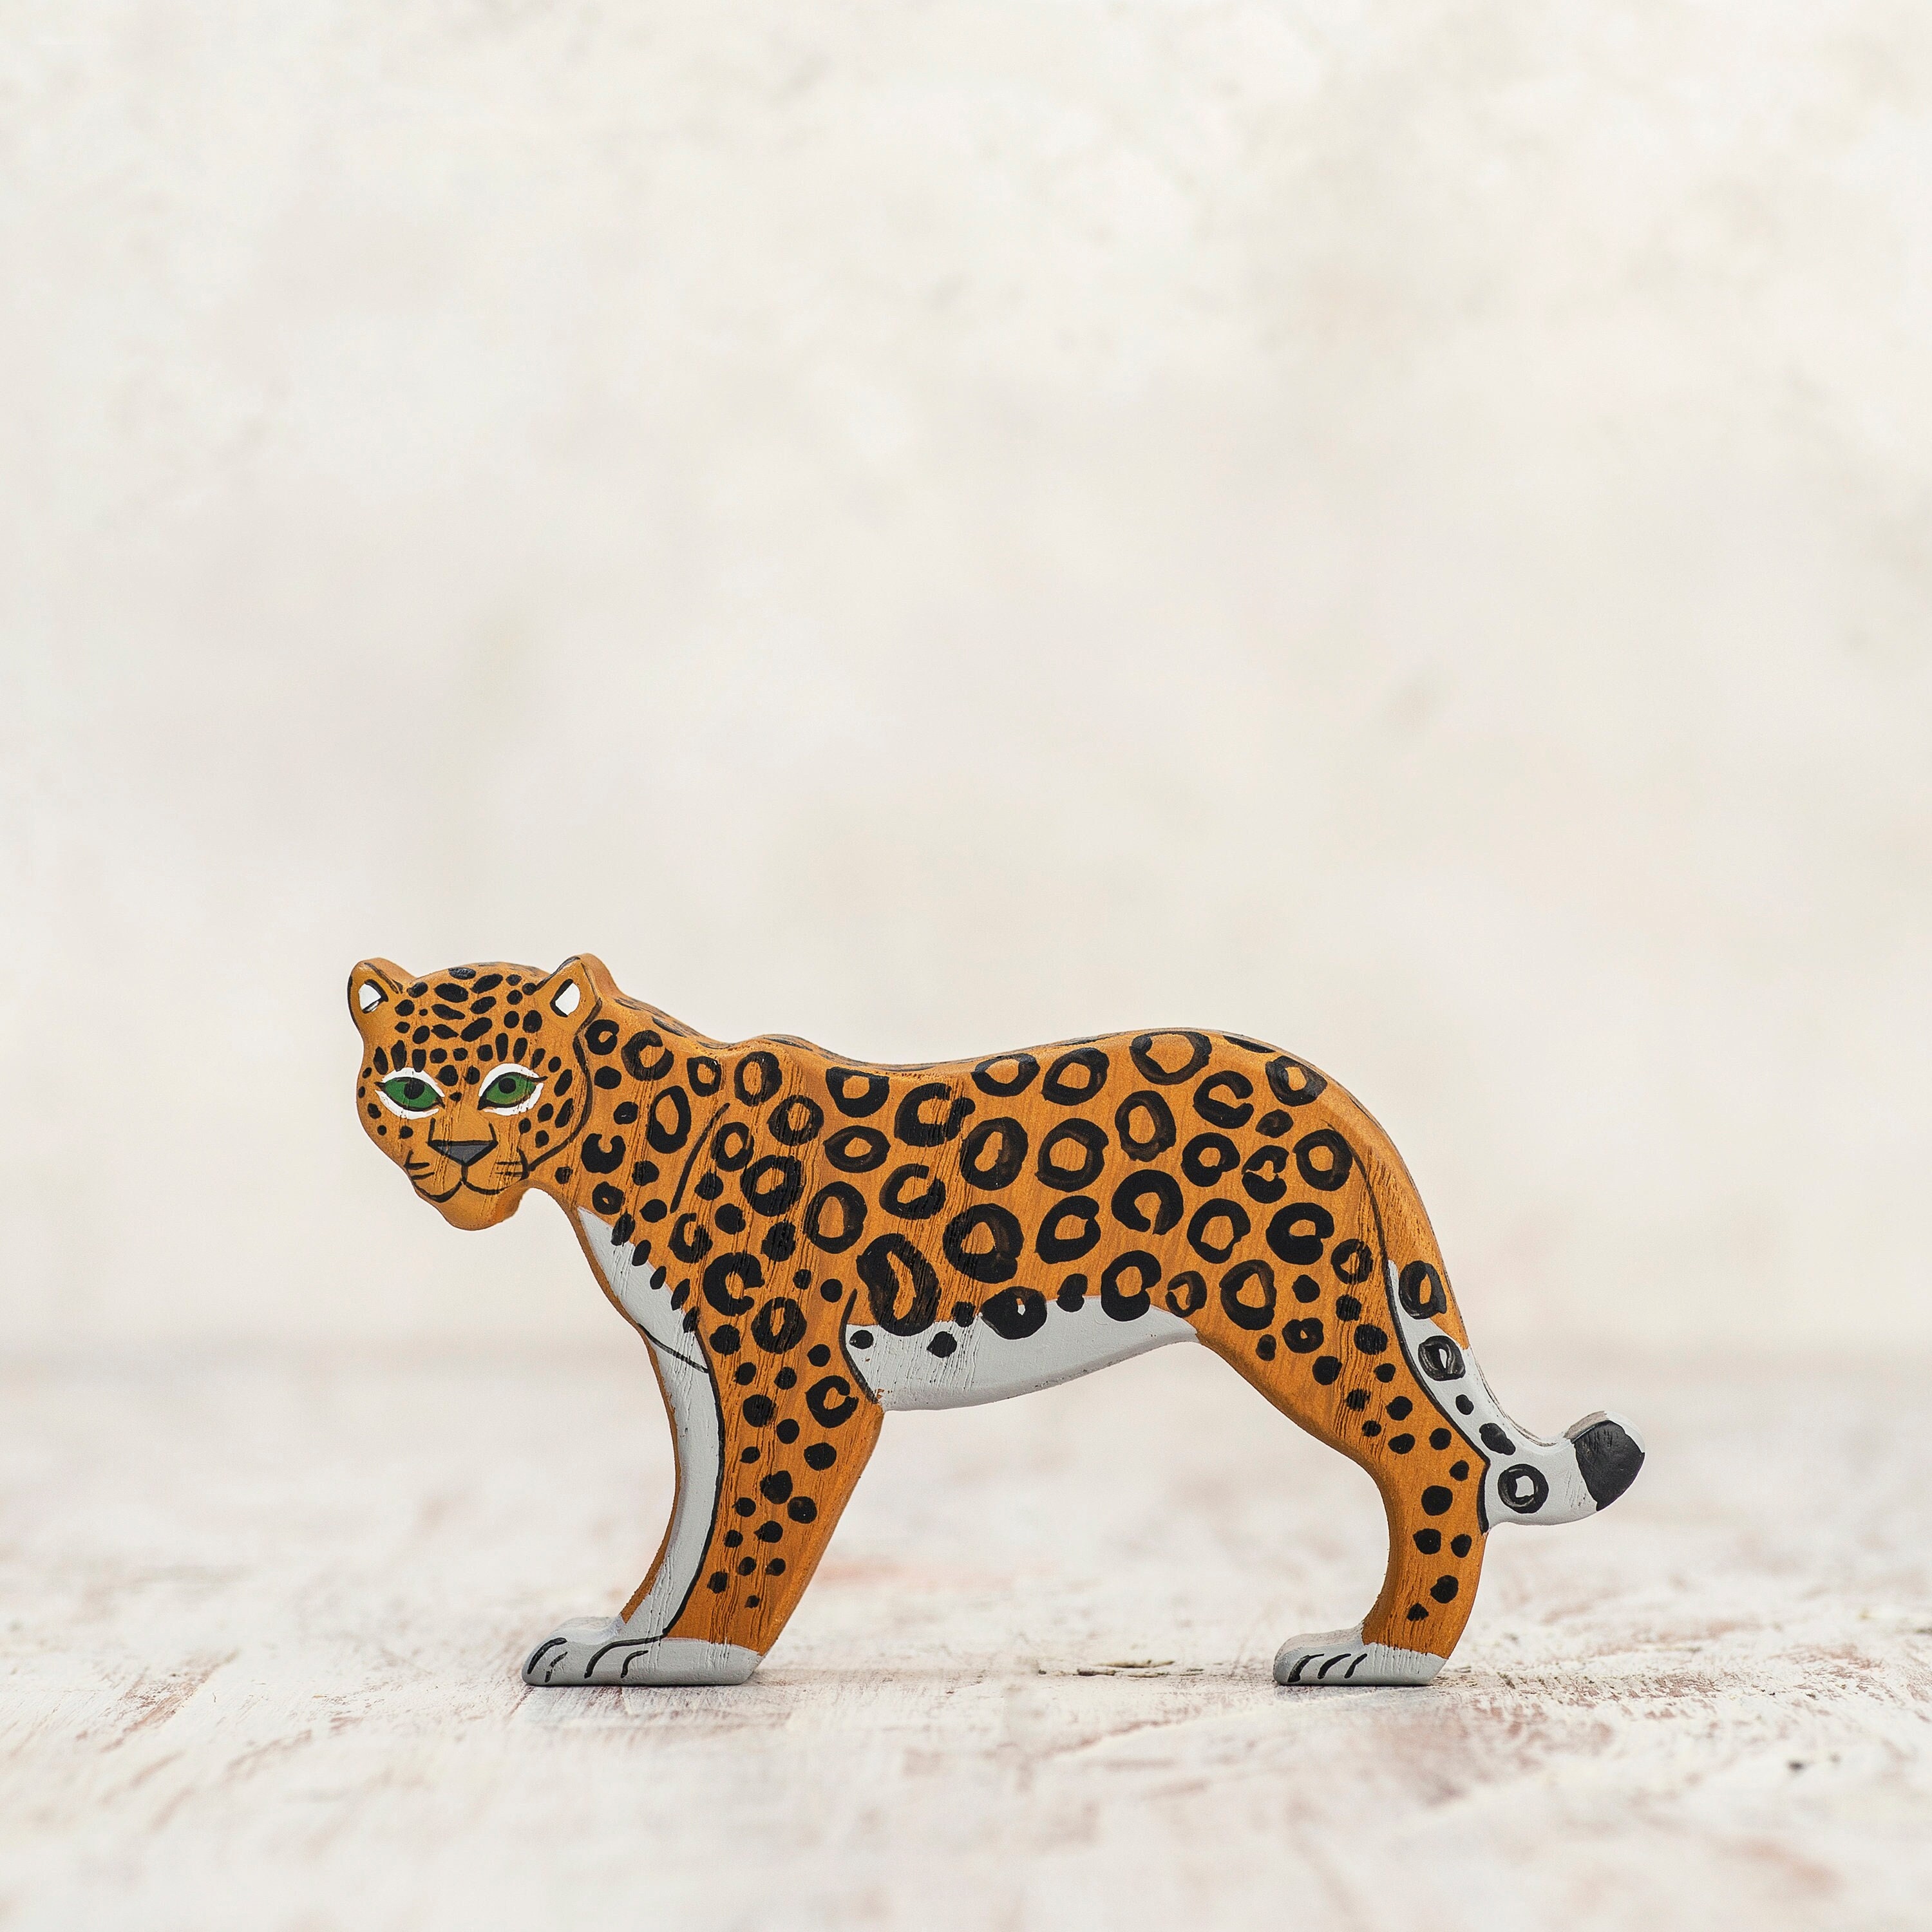 Cheetah Figurine -  Singapore